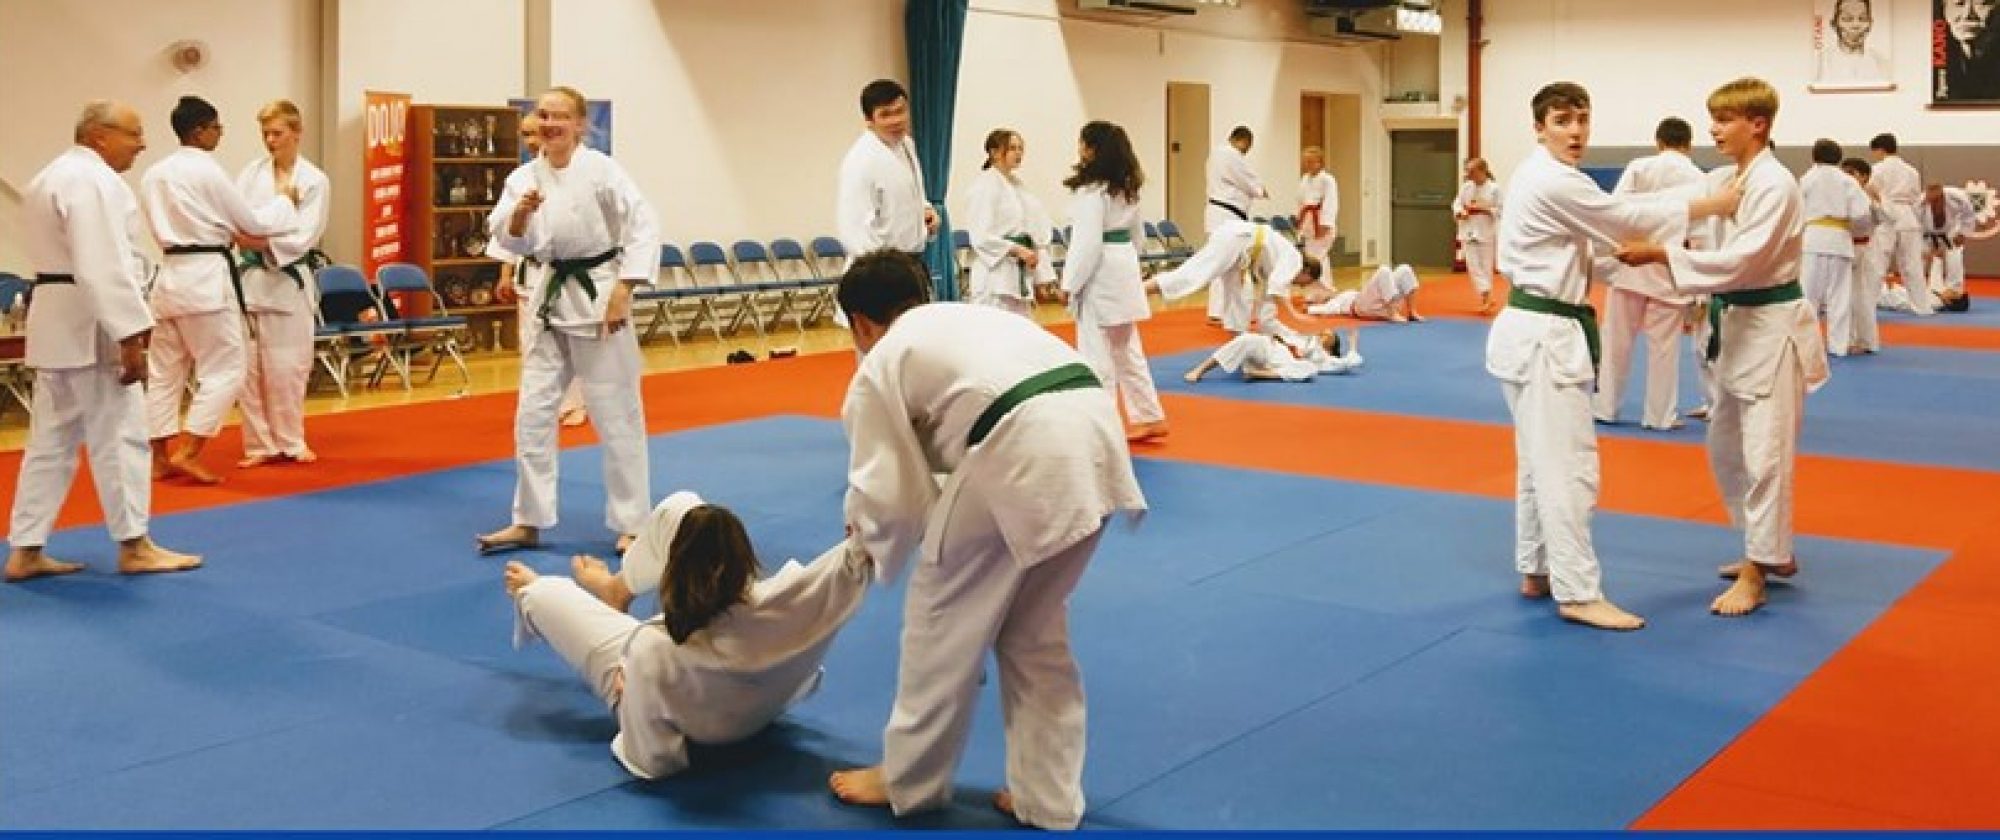 St Albans Judo Club